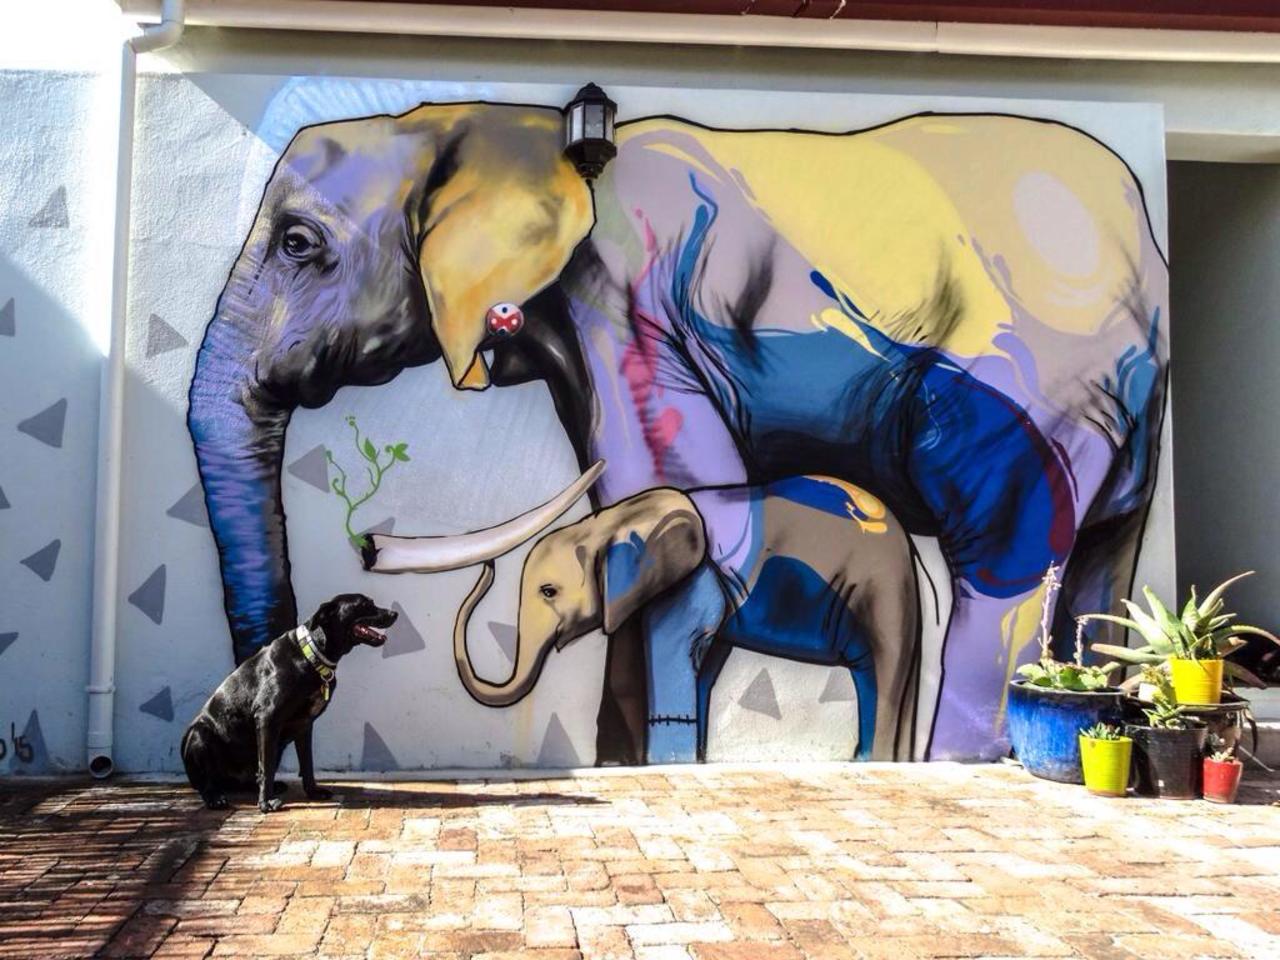 Latest nature in Street Art piece by Falko Paints In Cape Town

#art #mural #graffiti #streetart http://t.co/BP7Sfa9t2D From: GoogleStree…